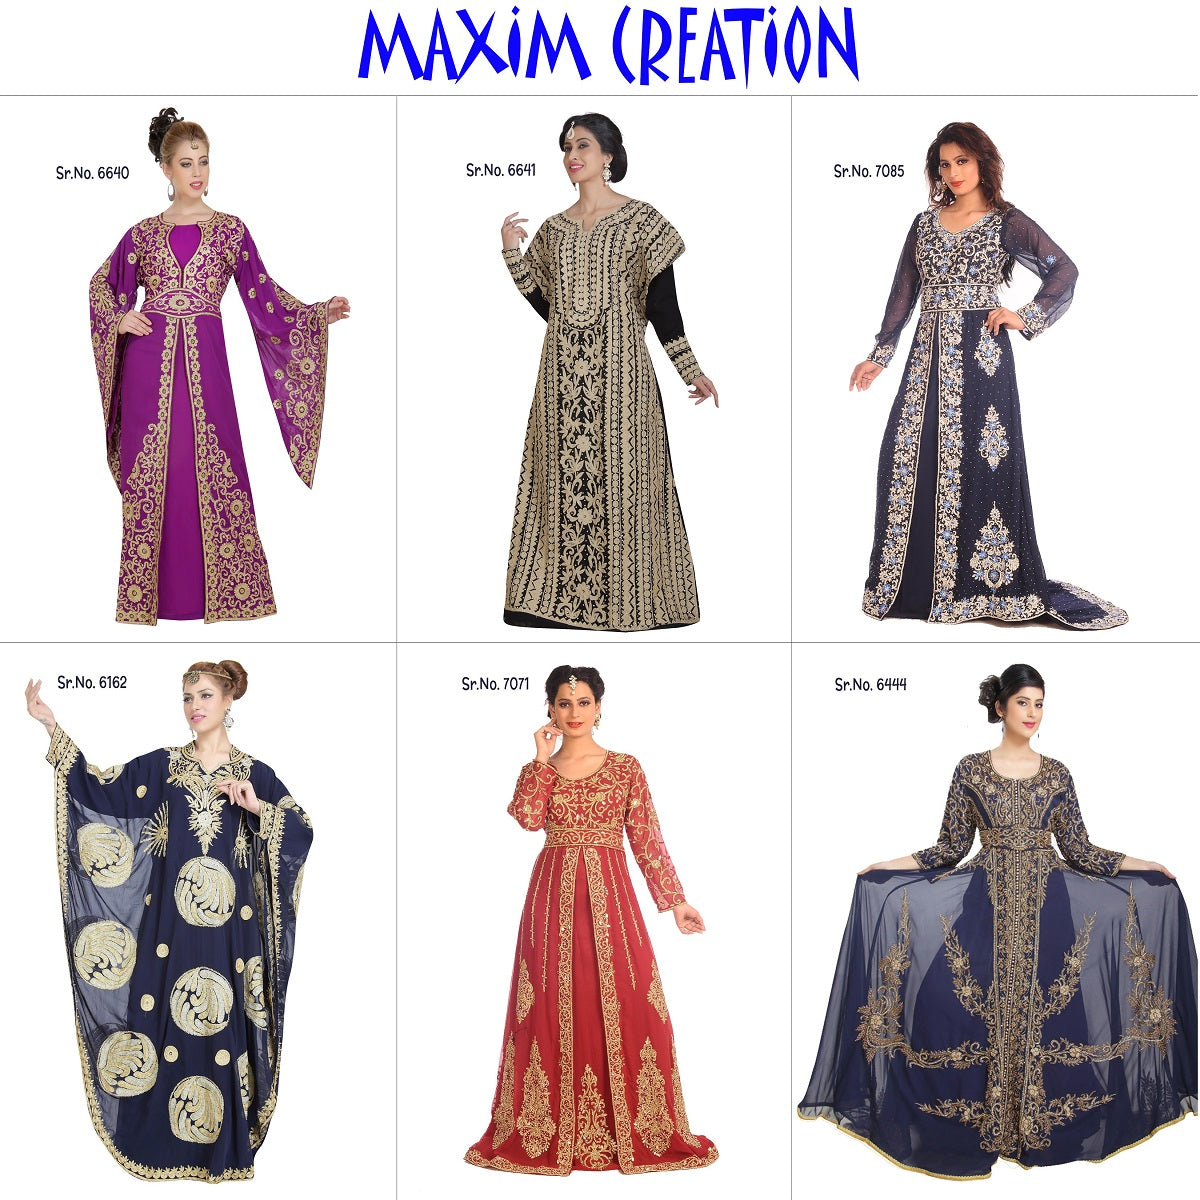 Classic Dubai Kaftan in Maroon Color For Eid - Maxim Creation